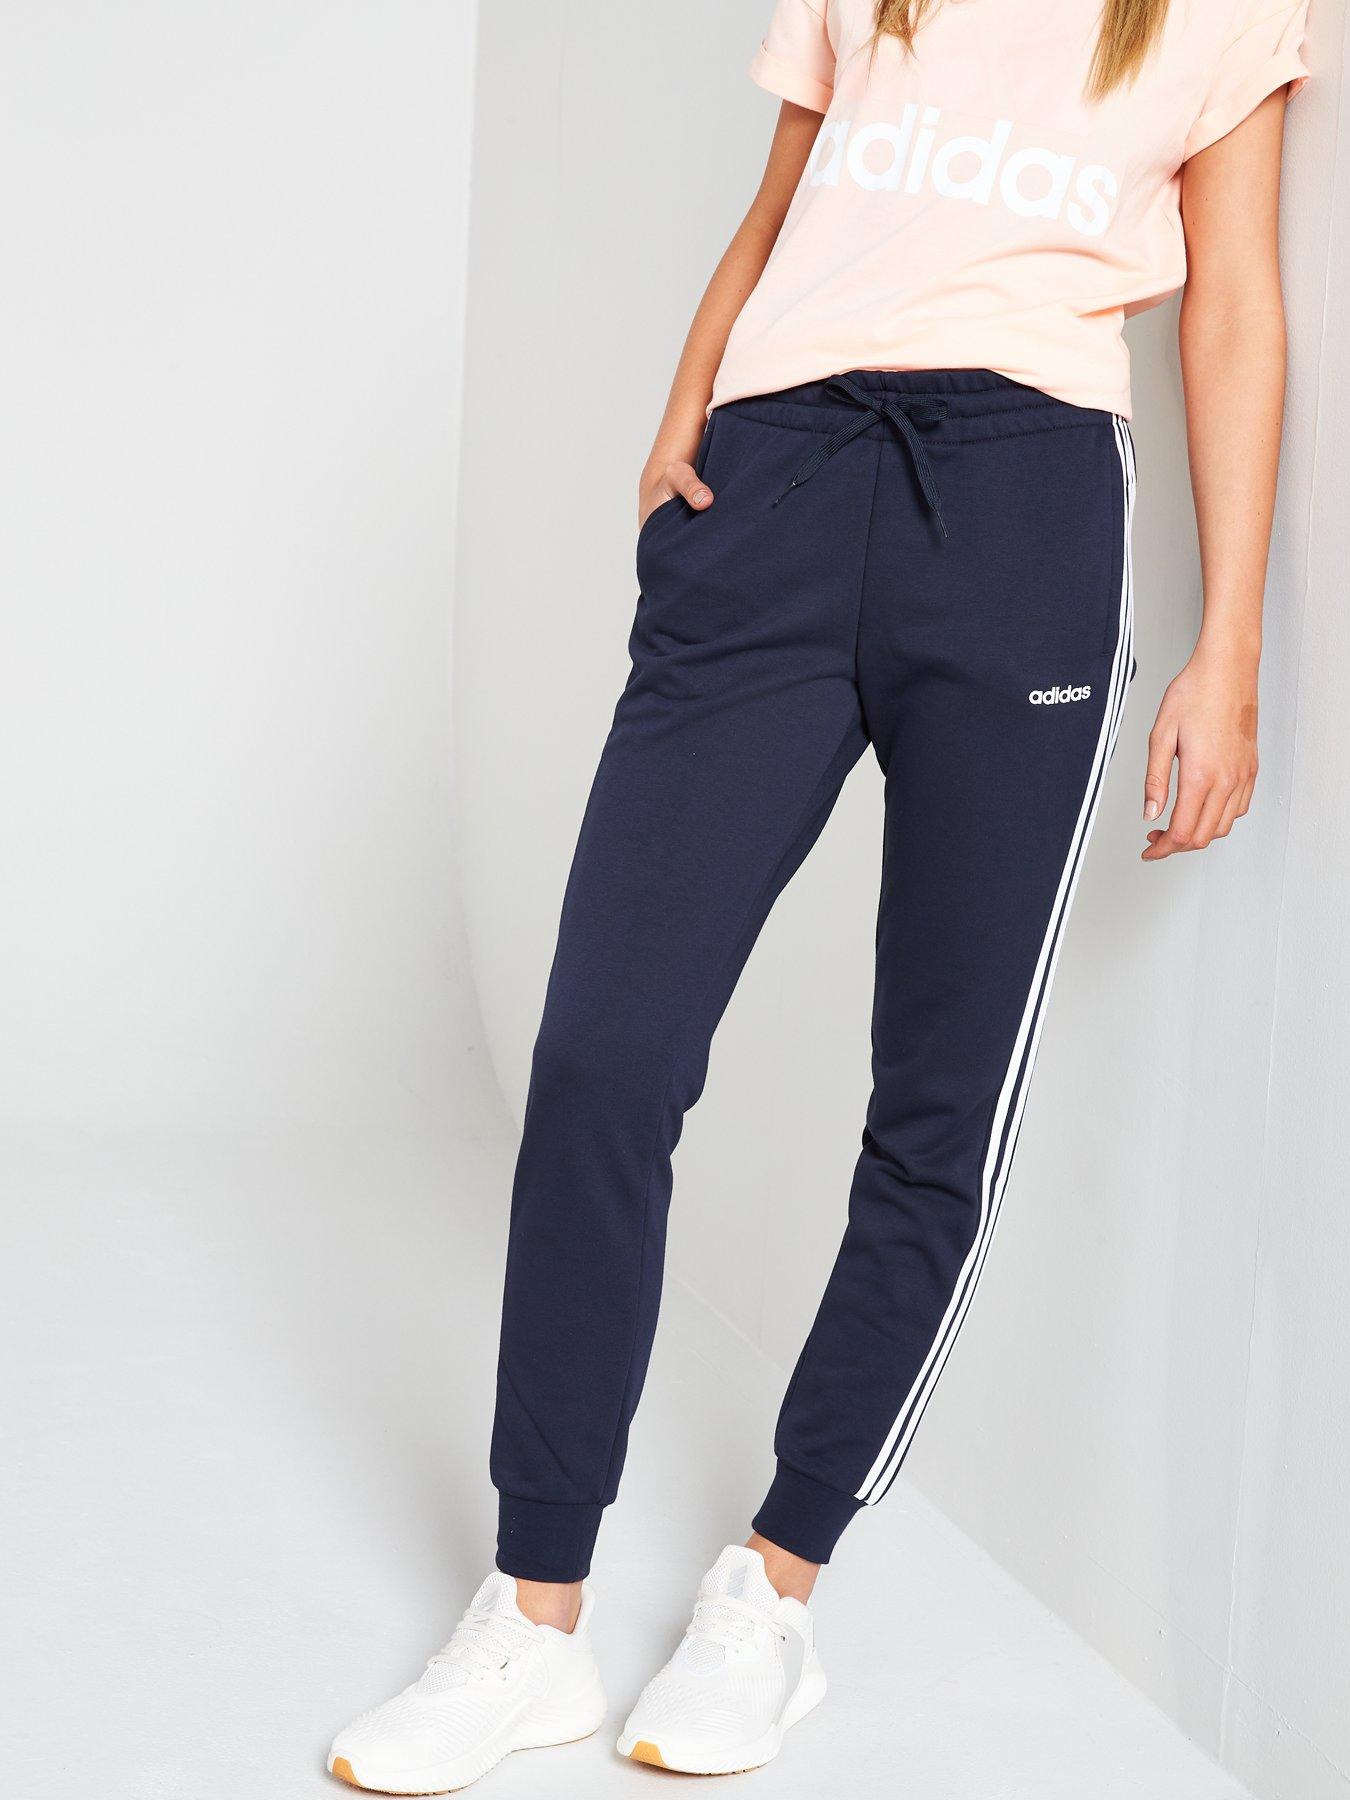 adidas essential 3 stripe jogging pants ladies